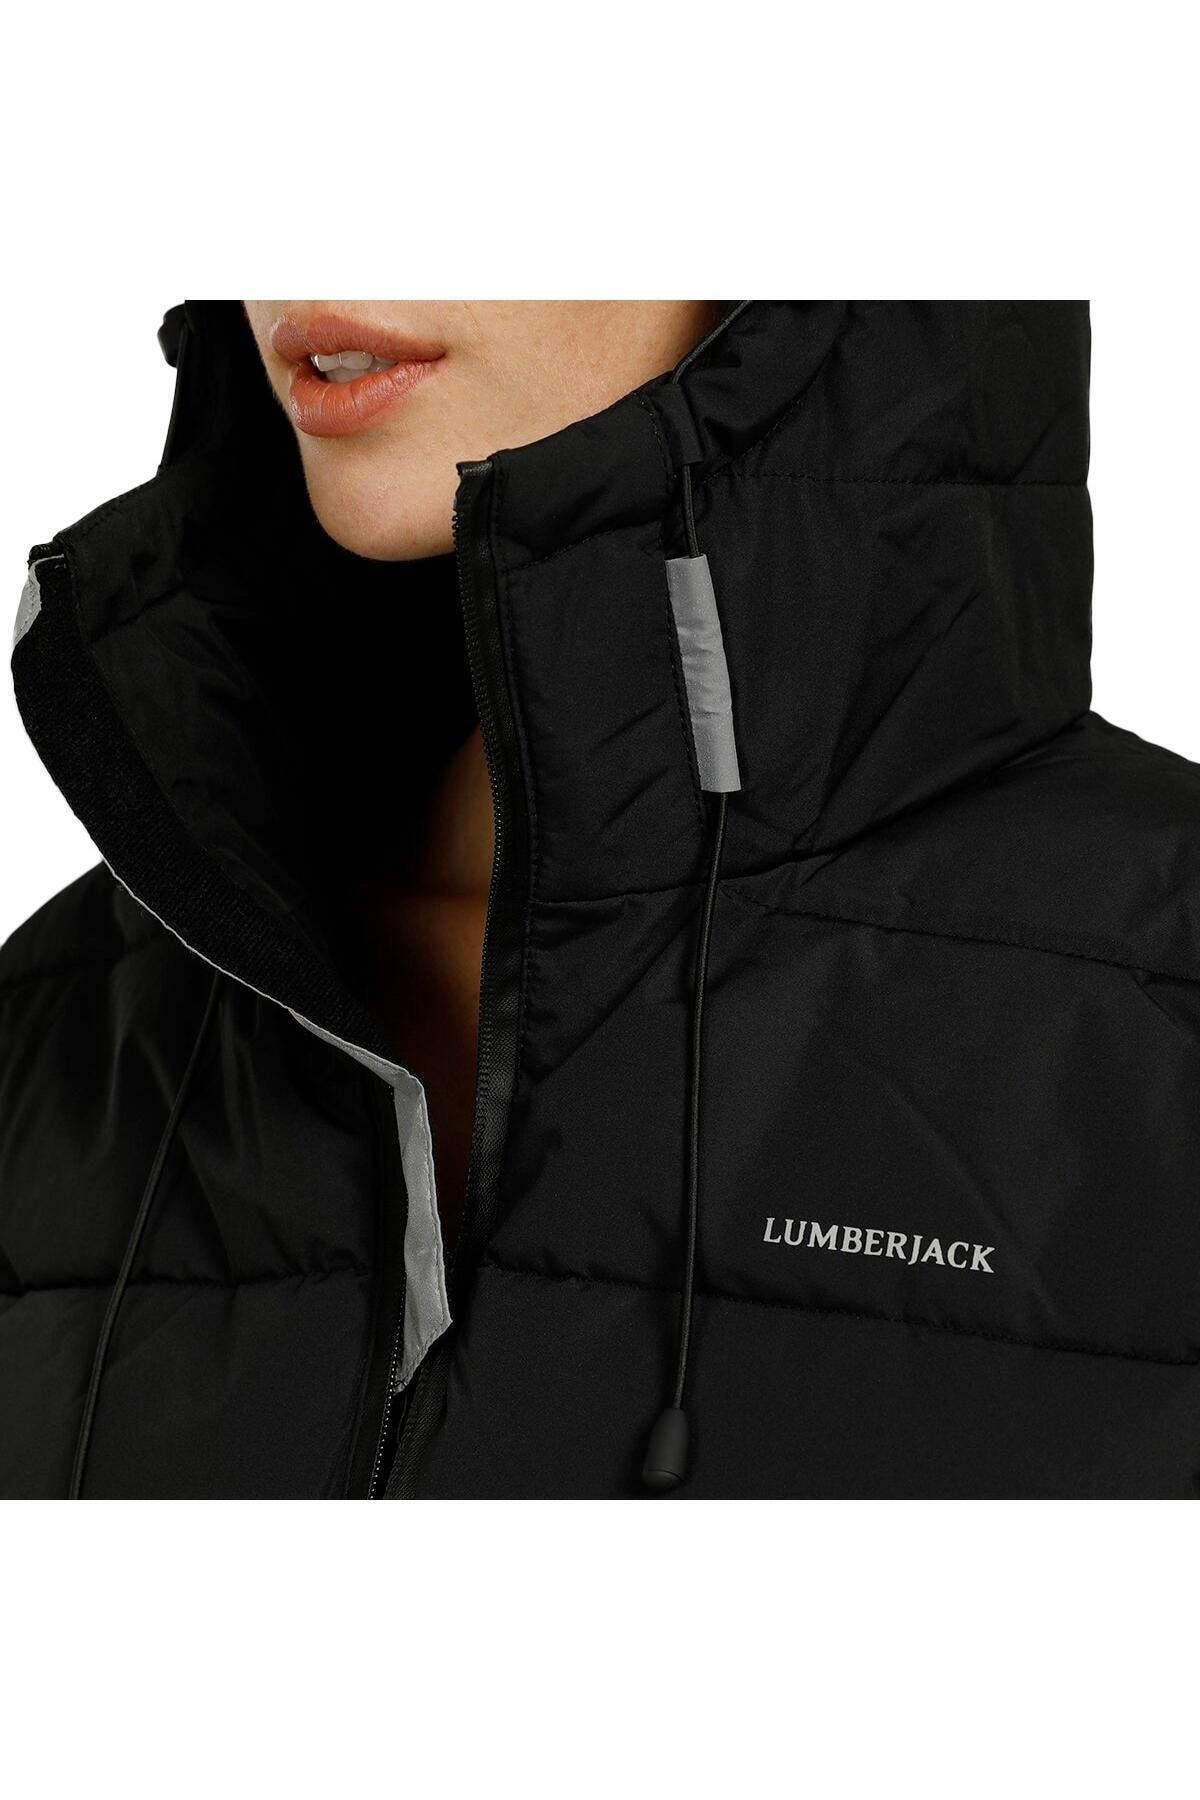 Lumberjack 100559599 Apreski Coat W کت مشکی زنانه